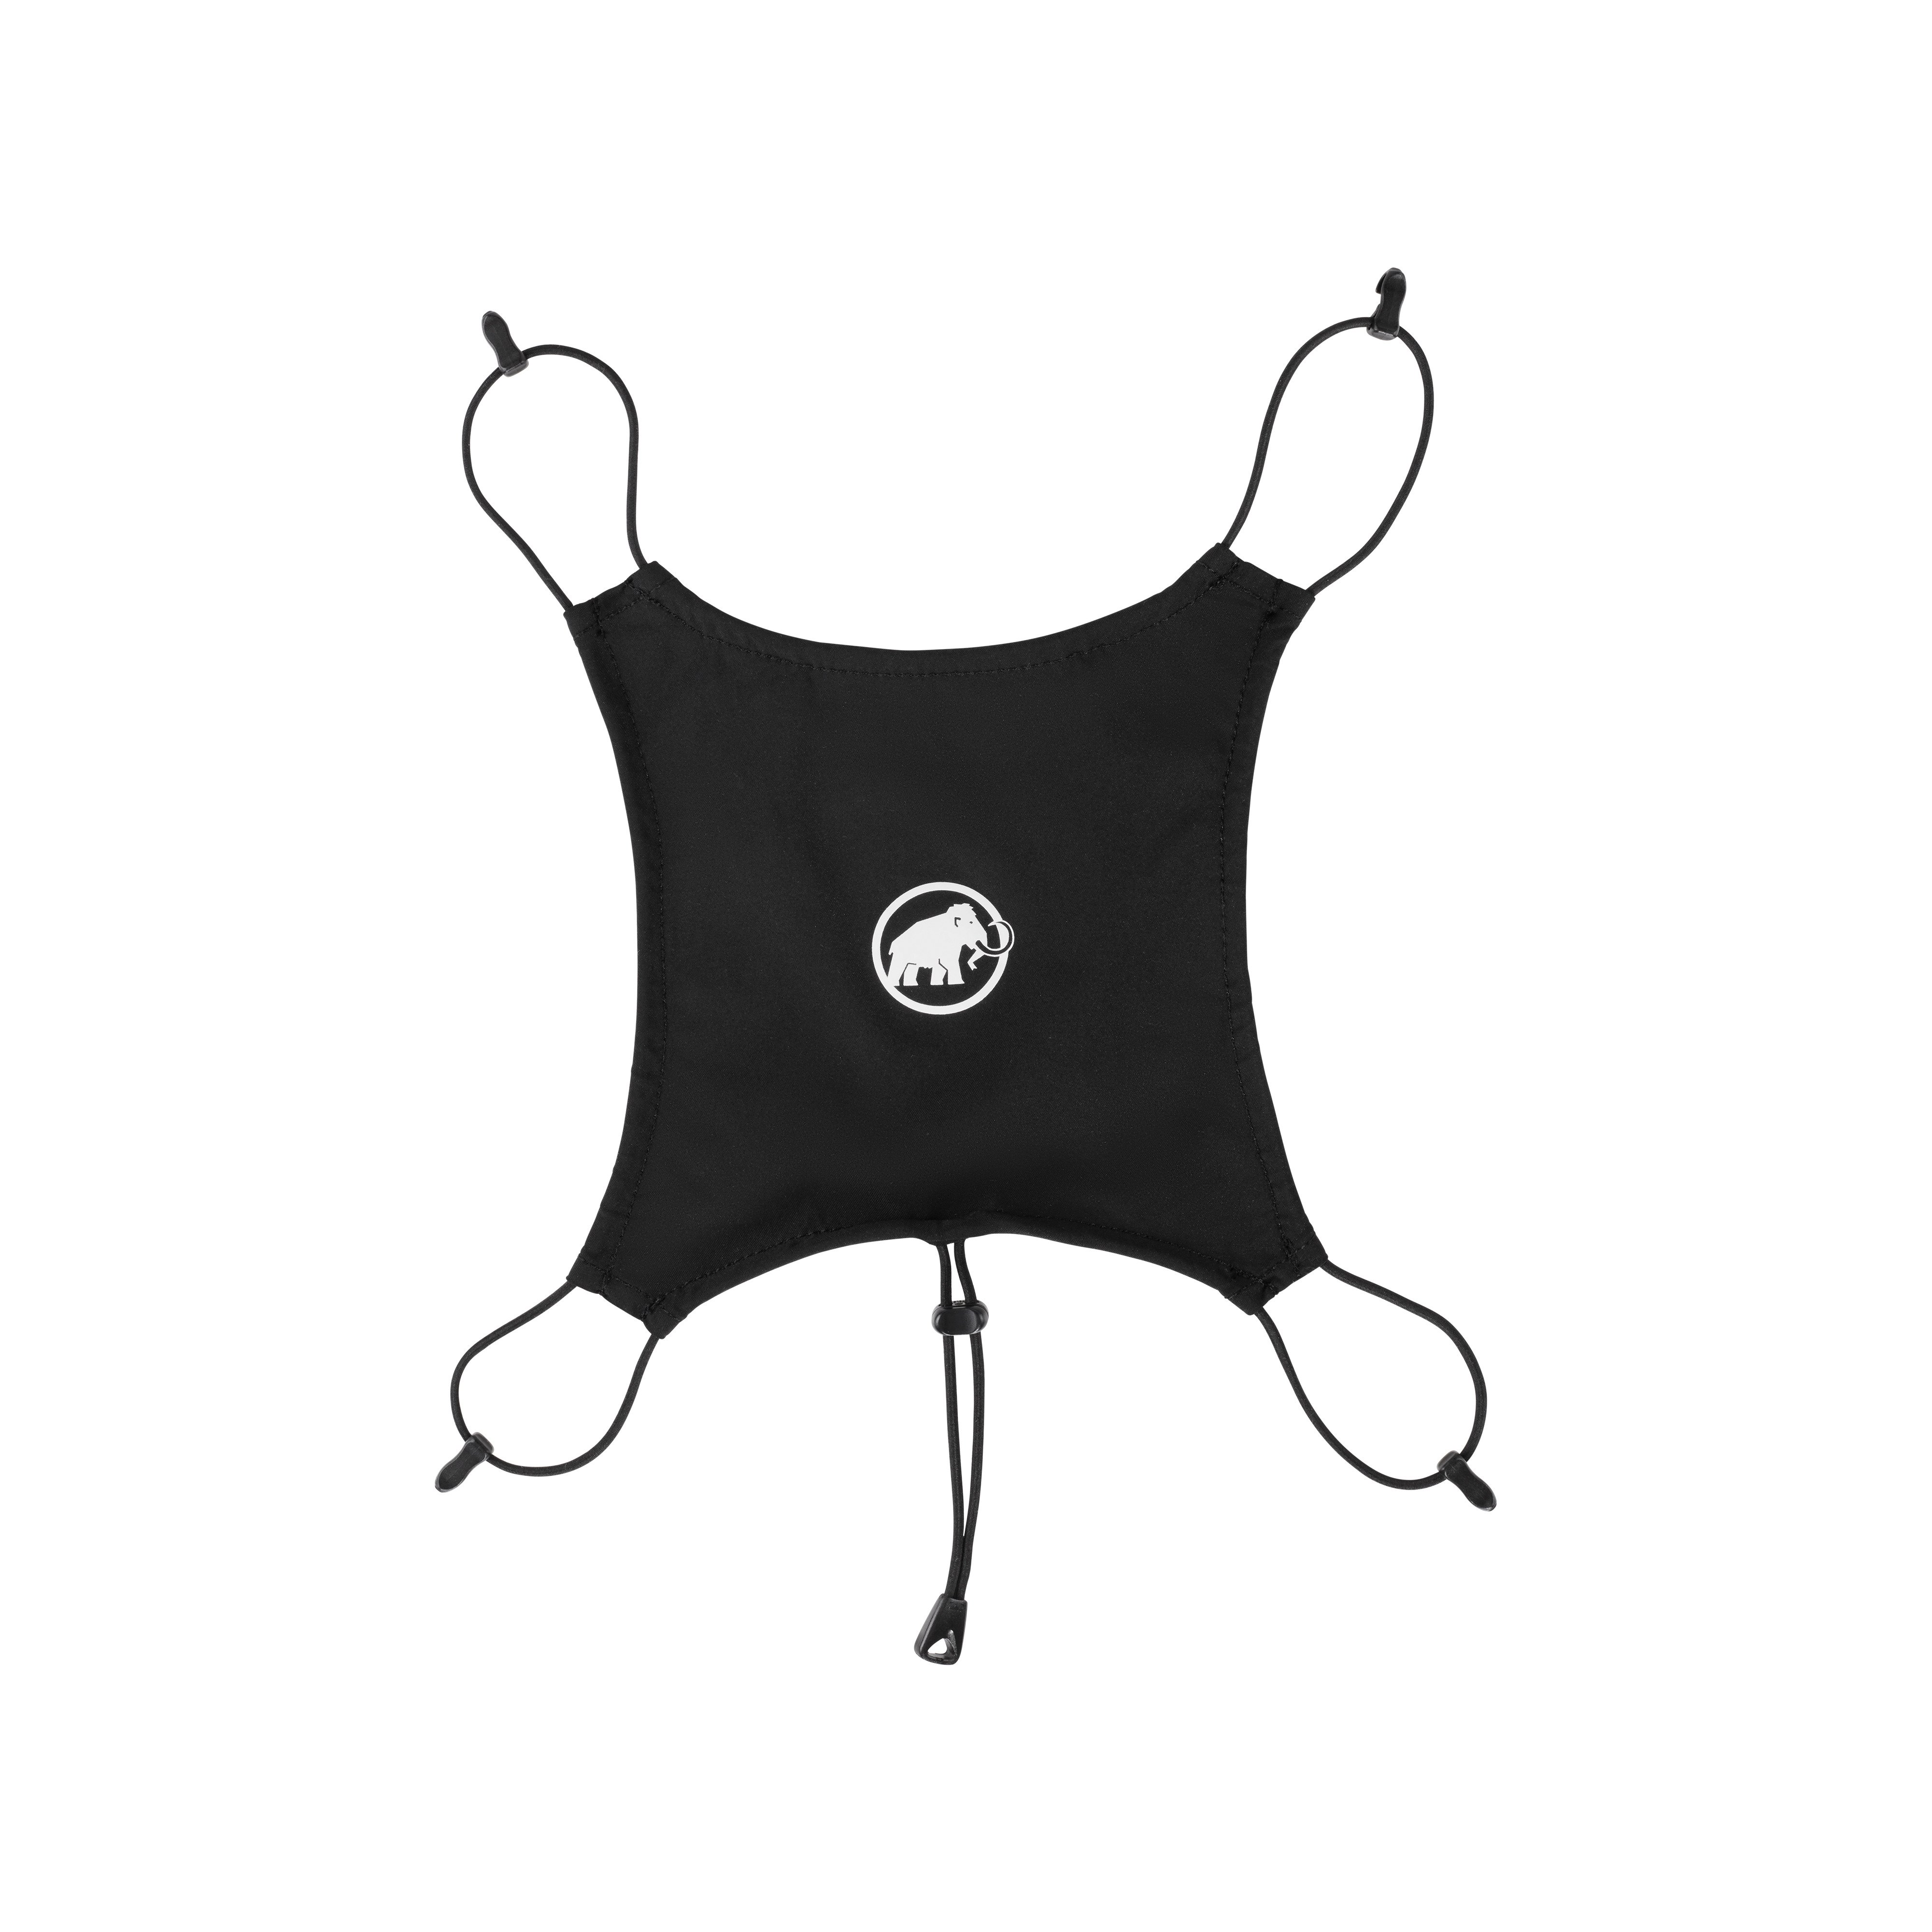 Helmet Holder - black, one size product image